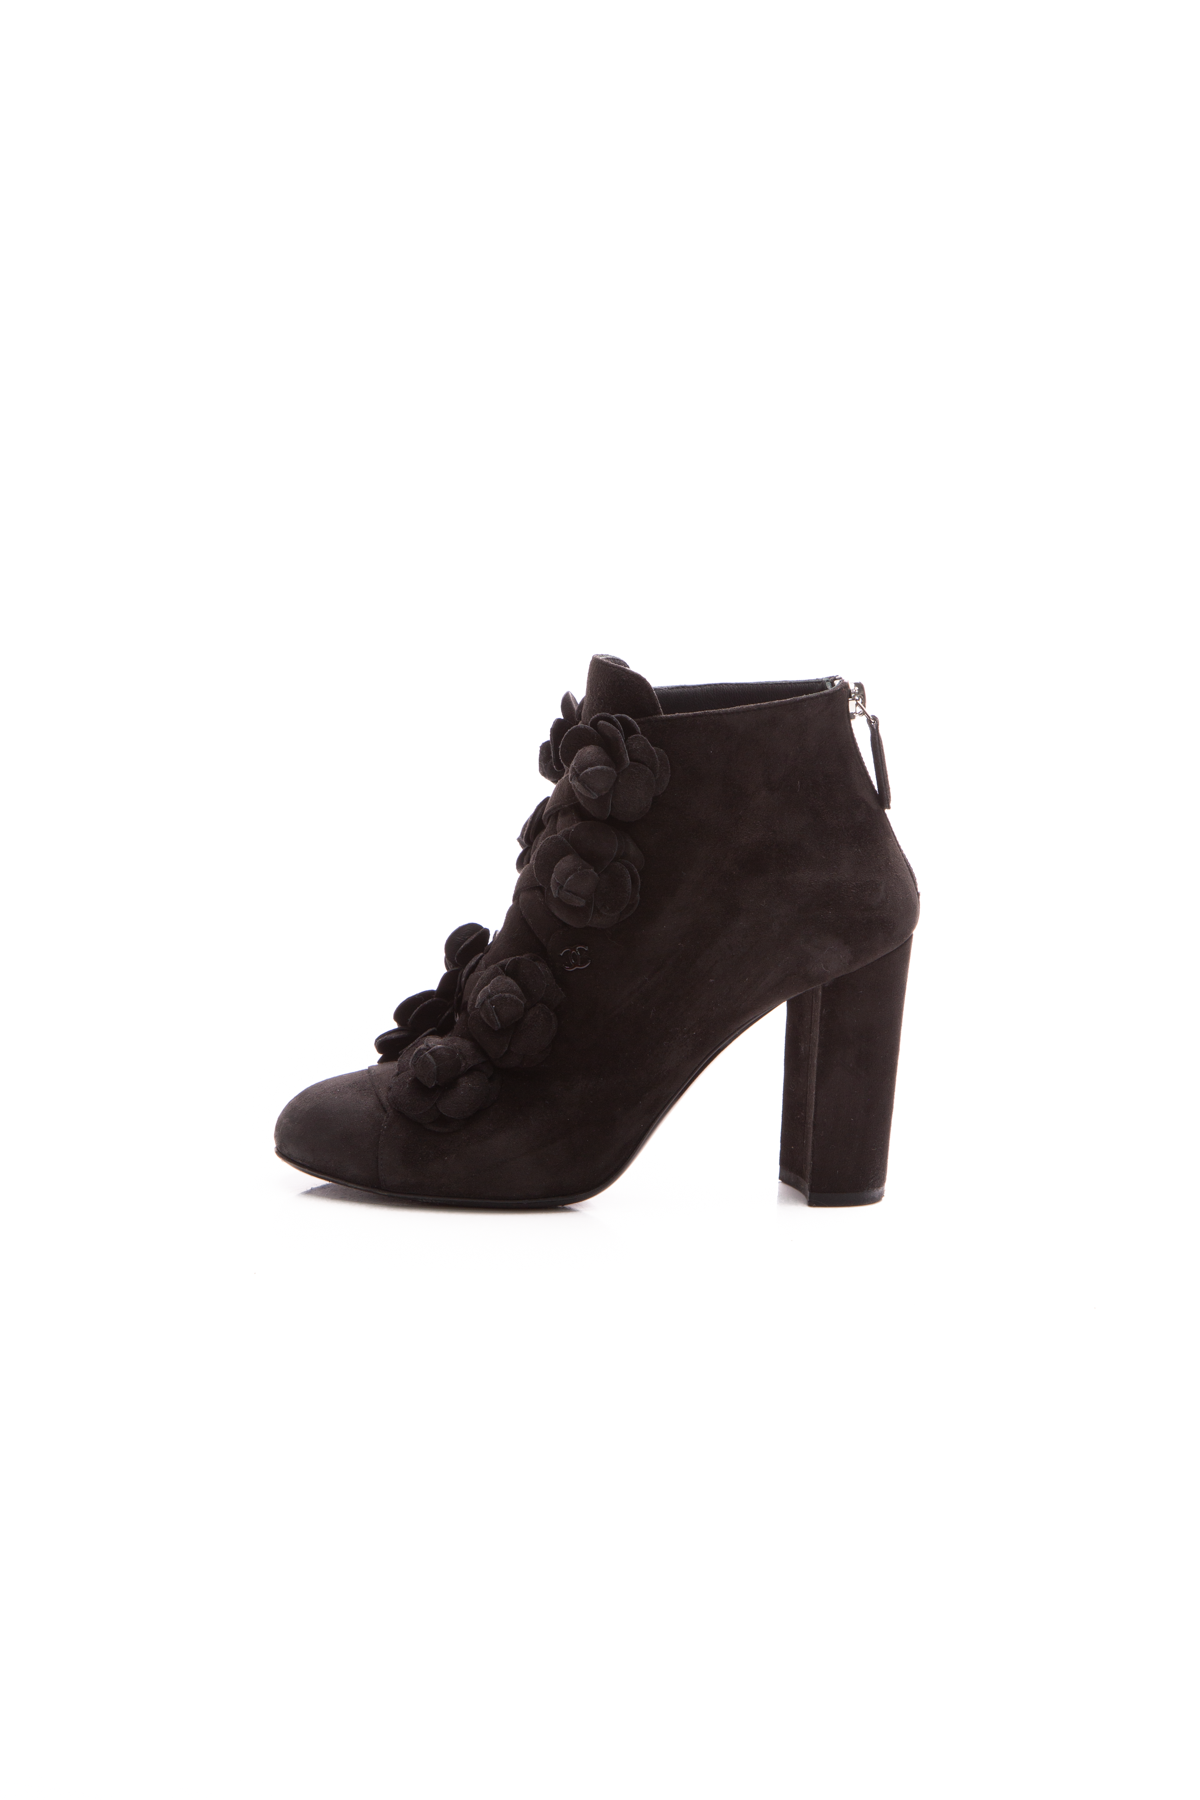 Chanel Cc Turnlock Motif Shoes Sandals Black Leather Vintage #37